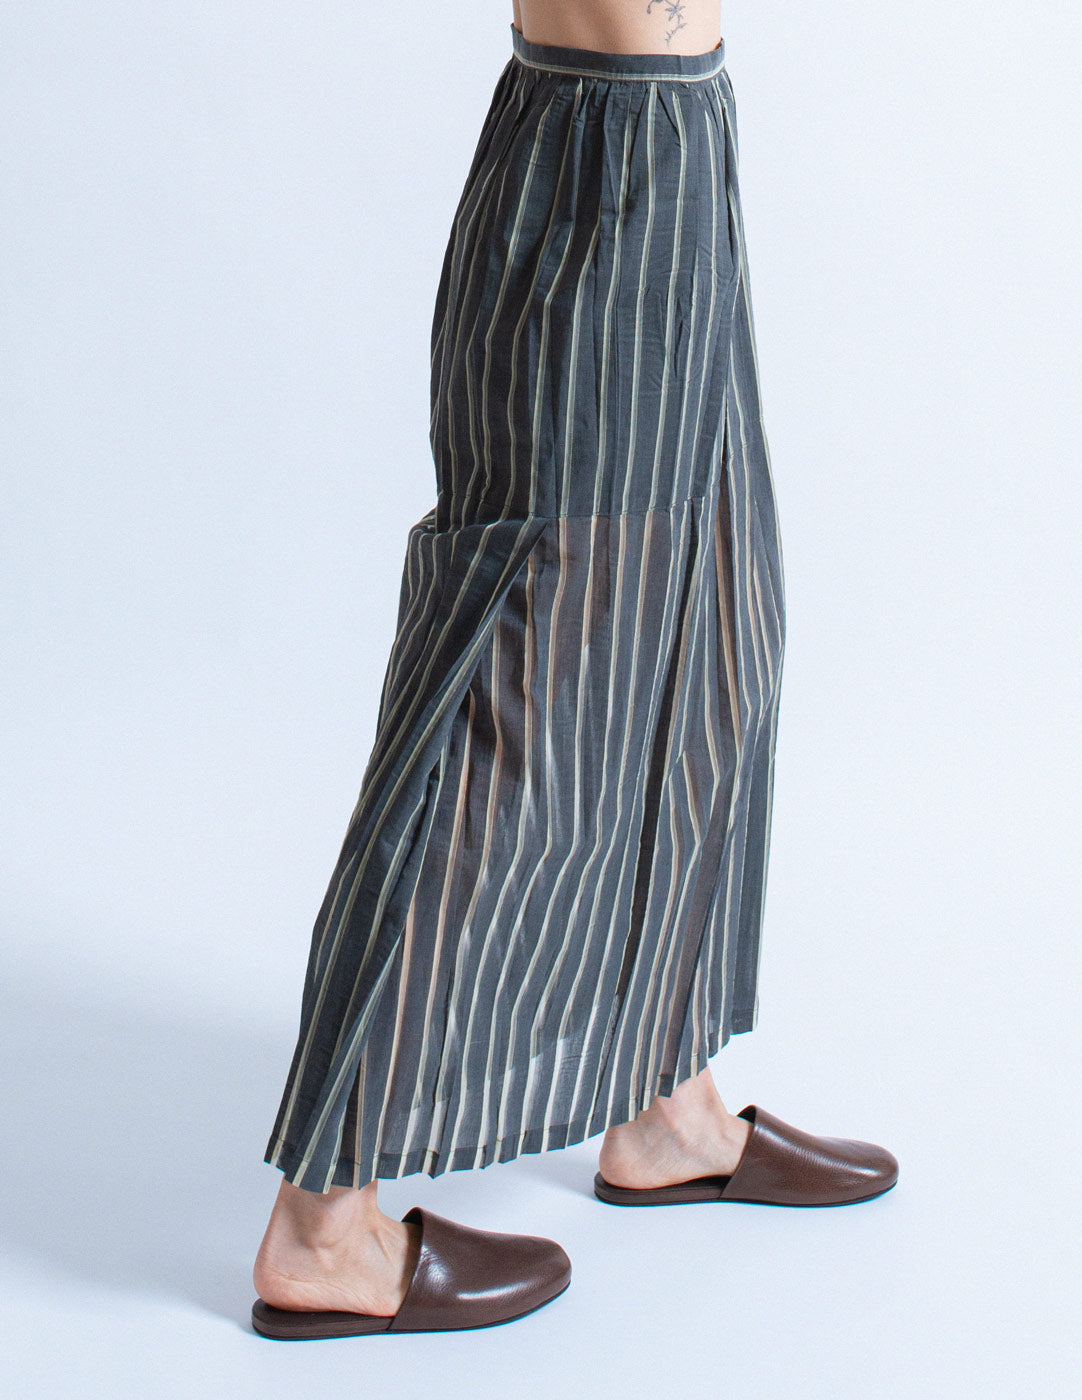 Issey Miyake vintage sheer striped long skirt side detail